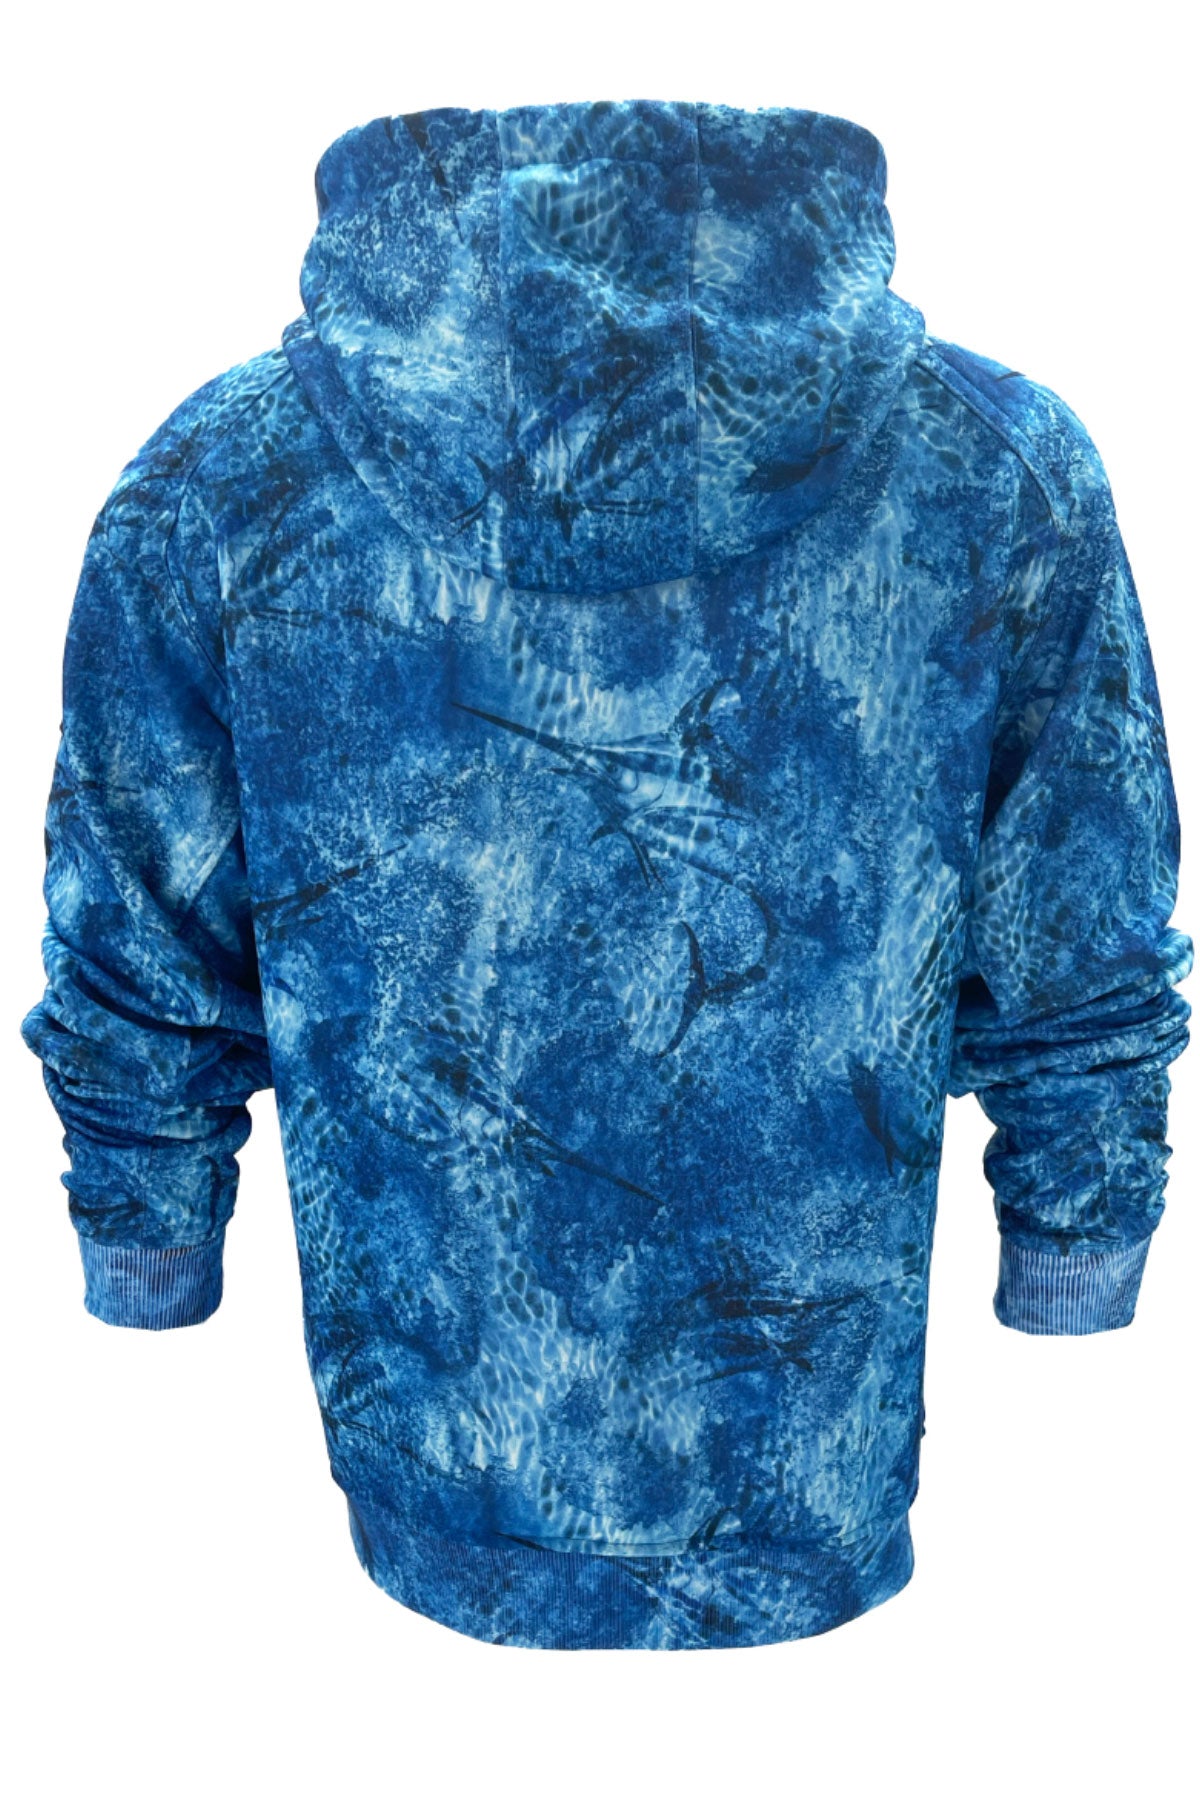 Jedi Full Zip Hooded Long Sleeve Sweatshirt - Marlin Mania - Blue - Stafu Pro Series